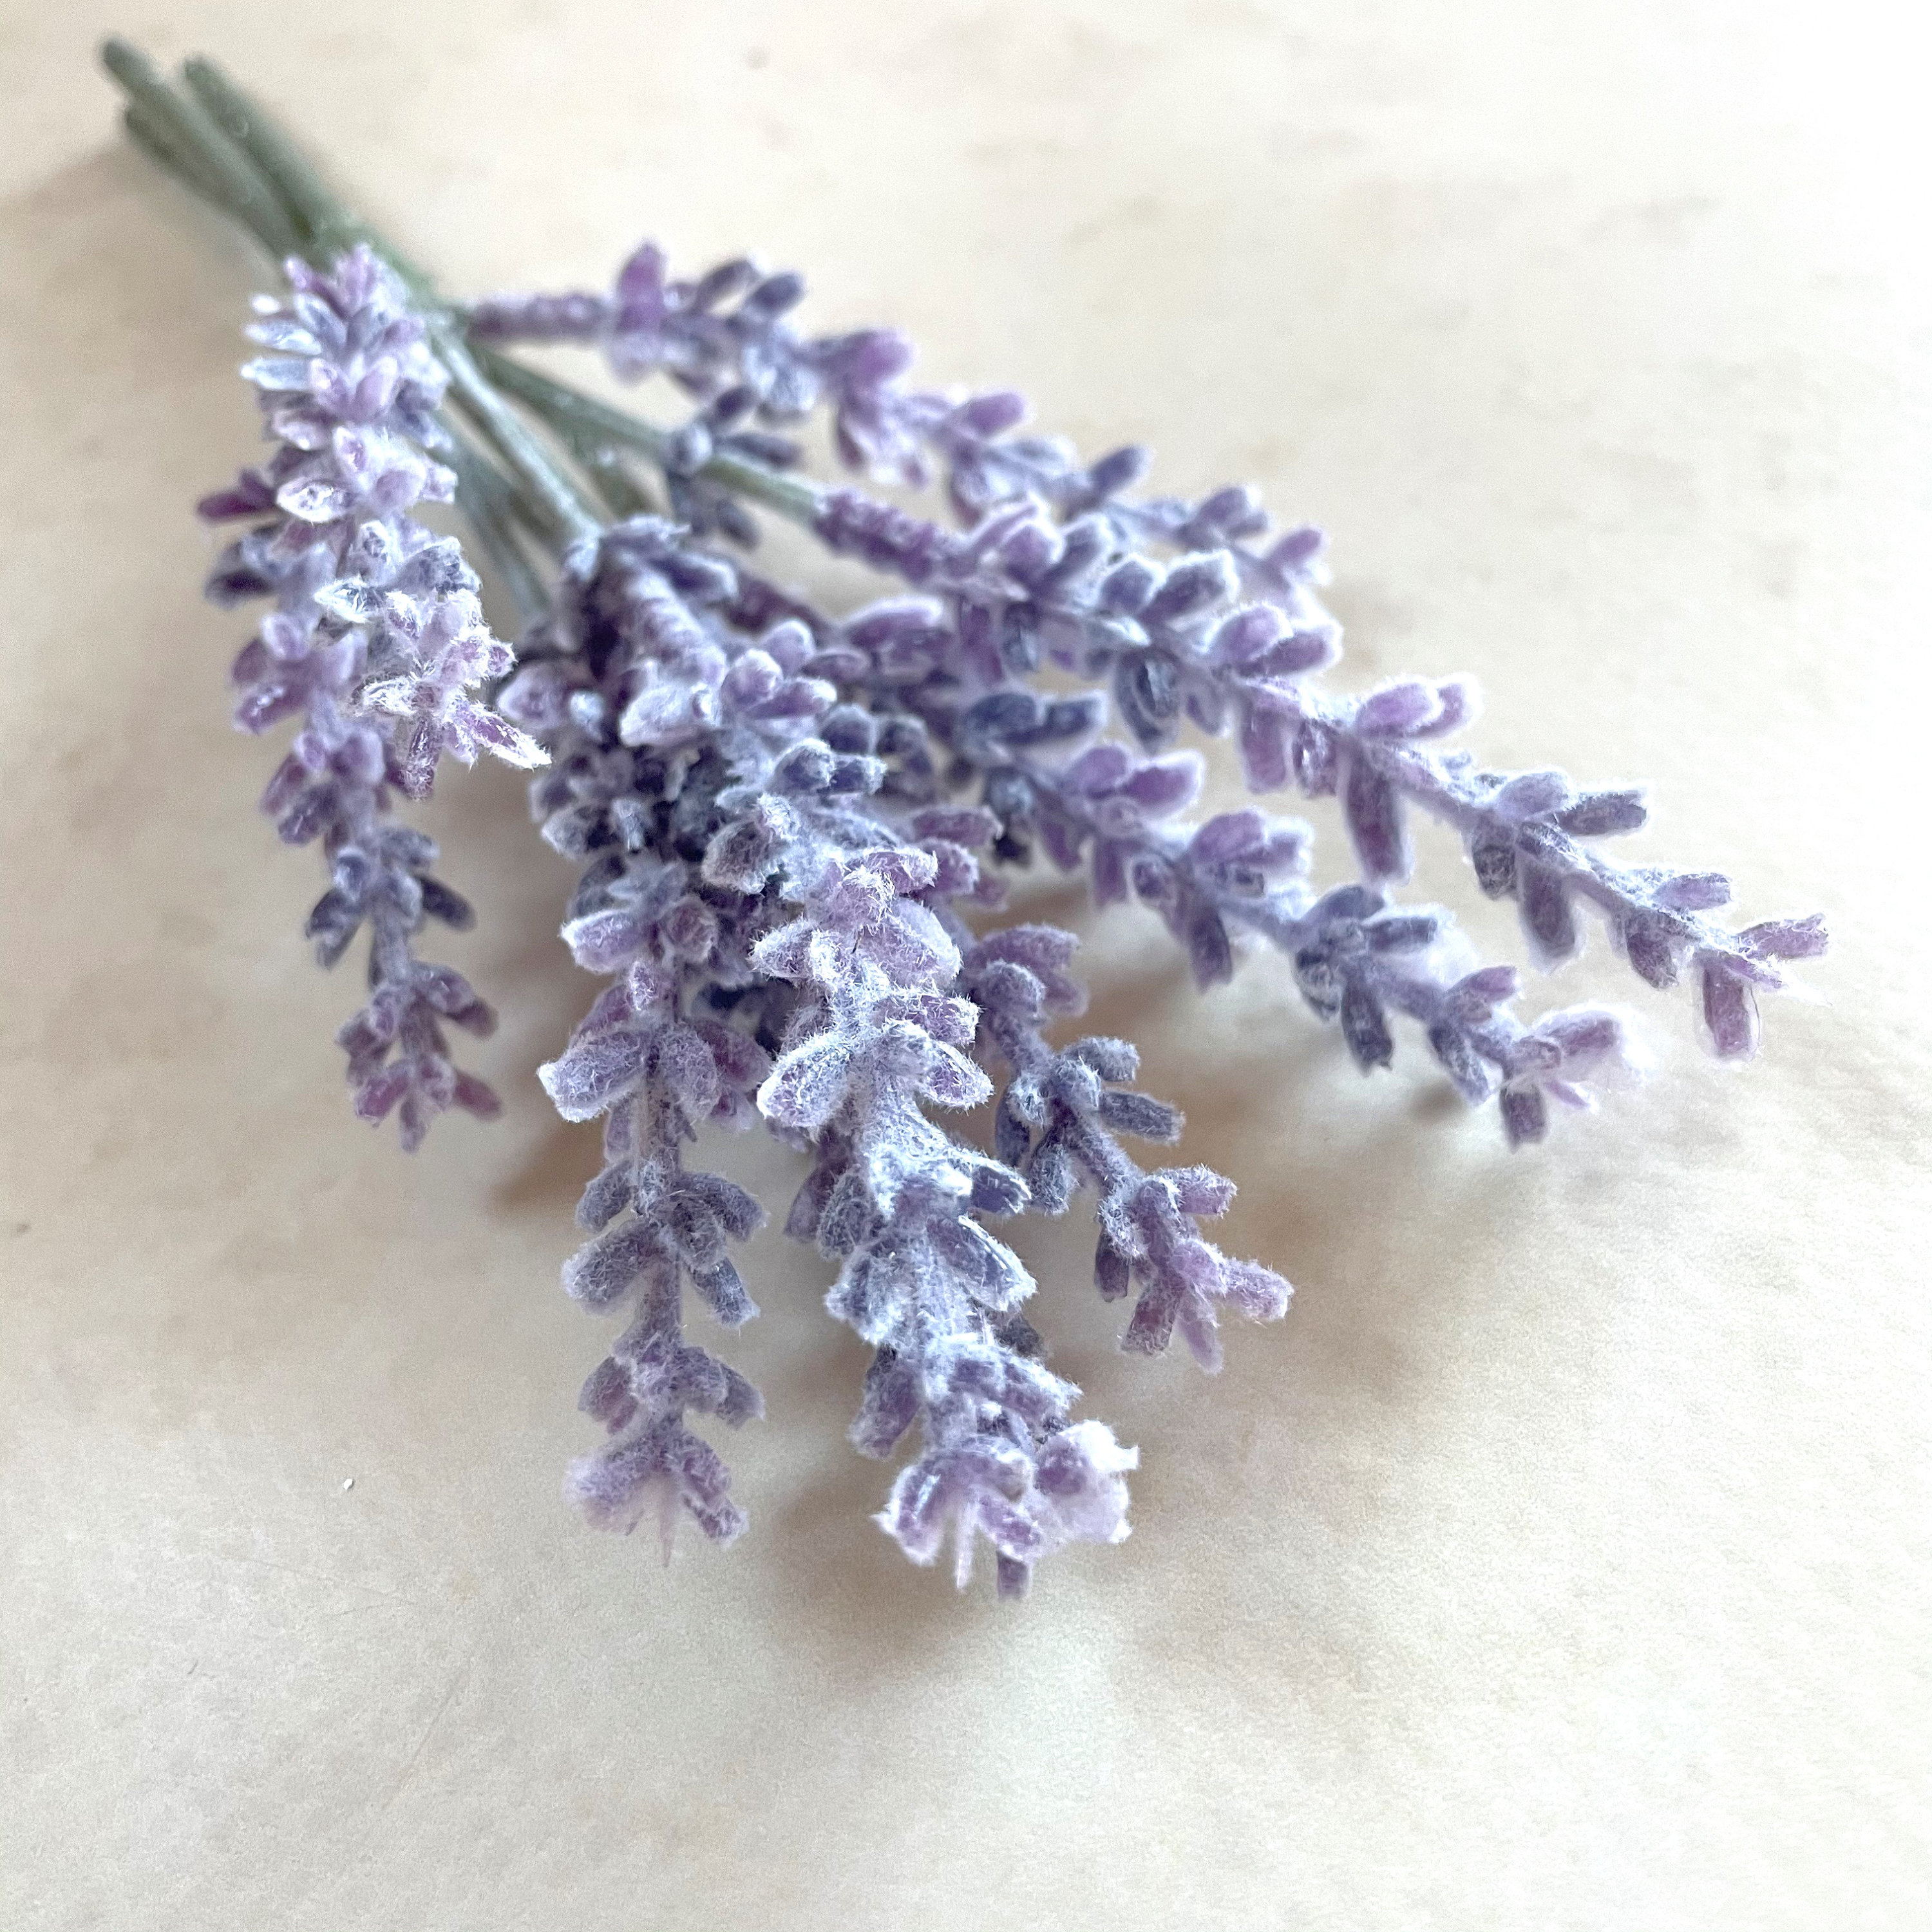 Small Lavender Bundles